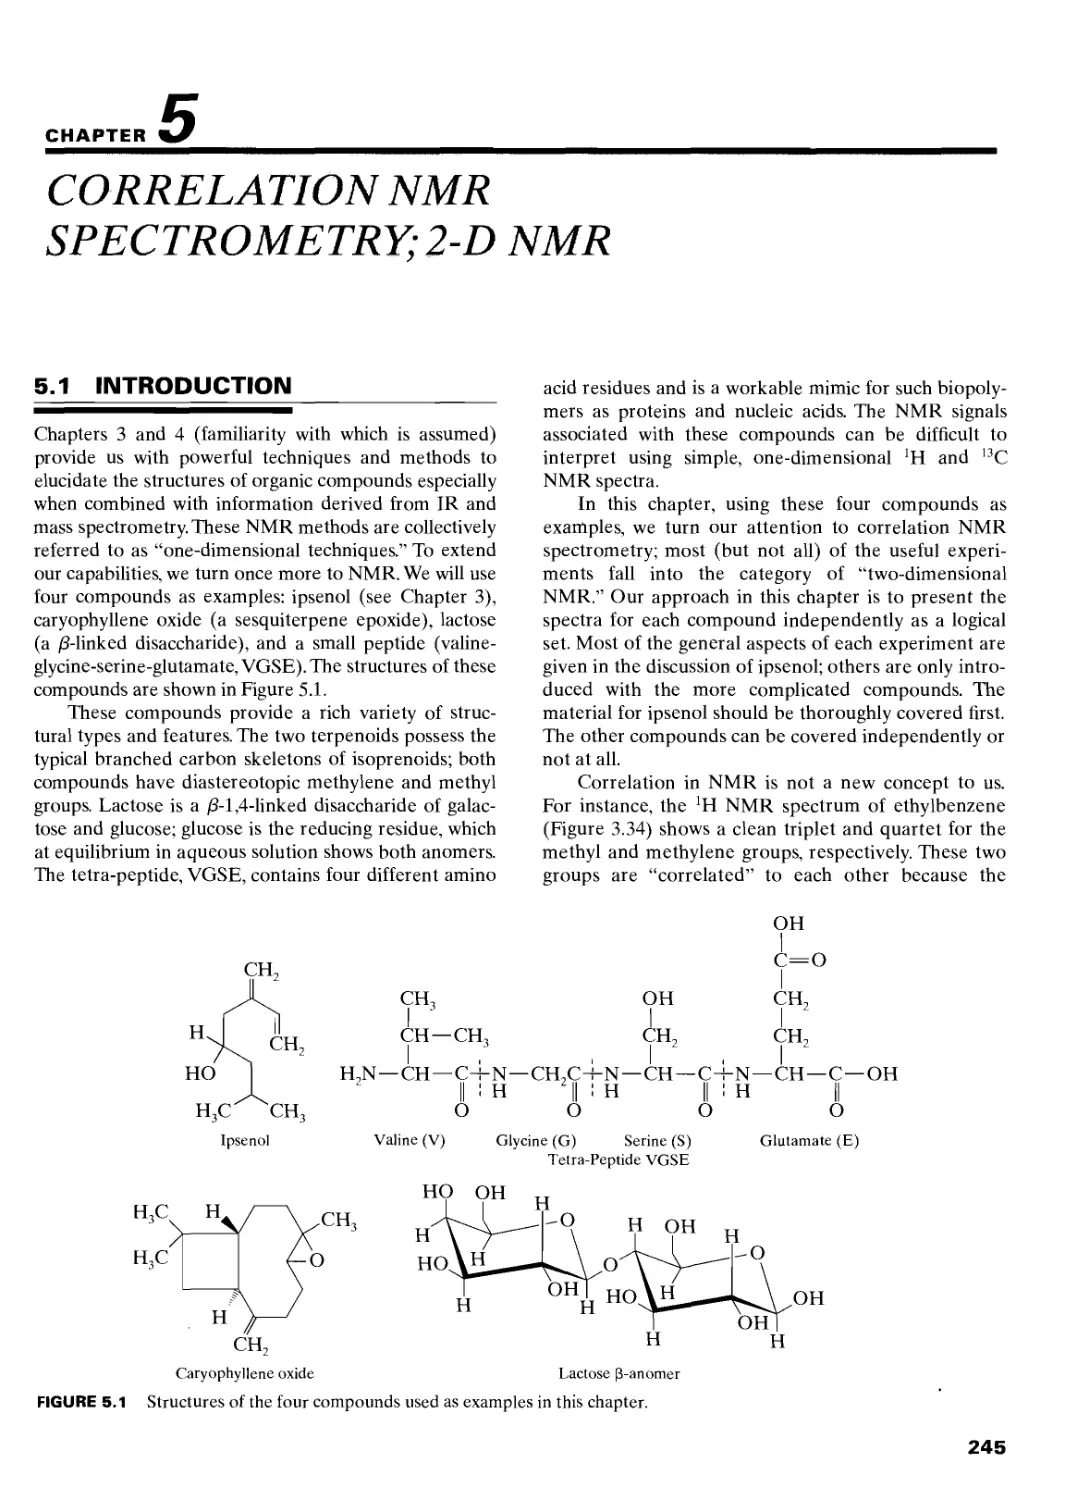 Chapter 5: Correlation NMR Spectrometry; 2-D NMR